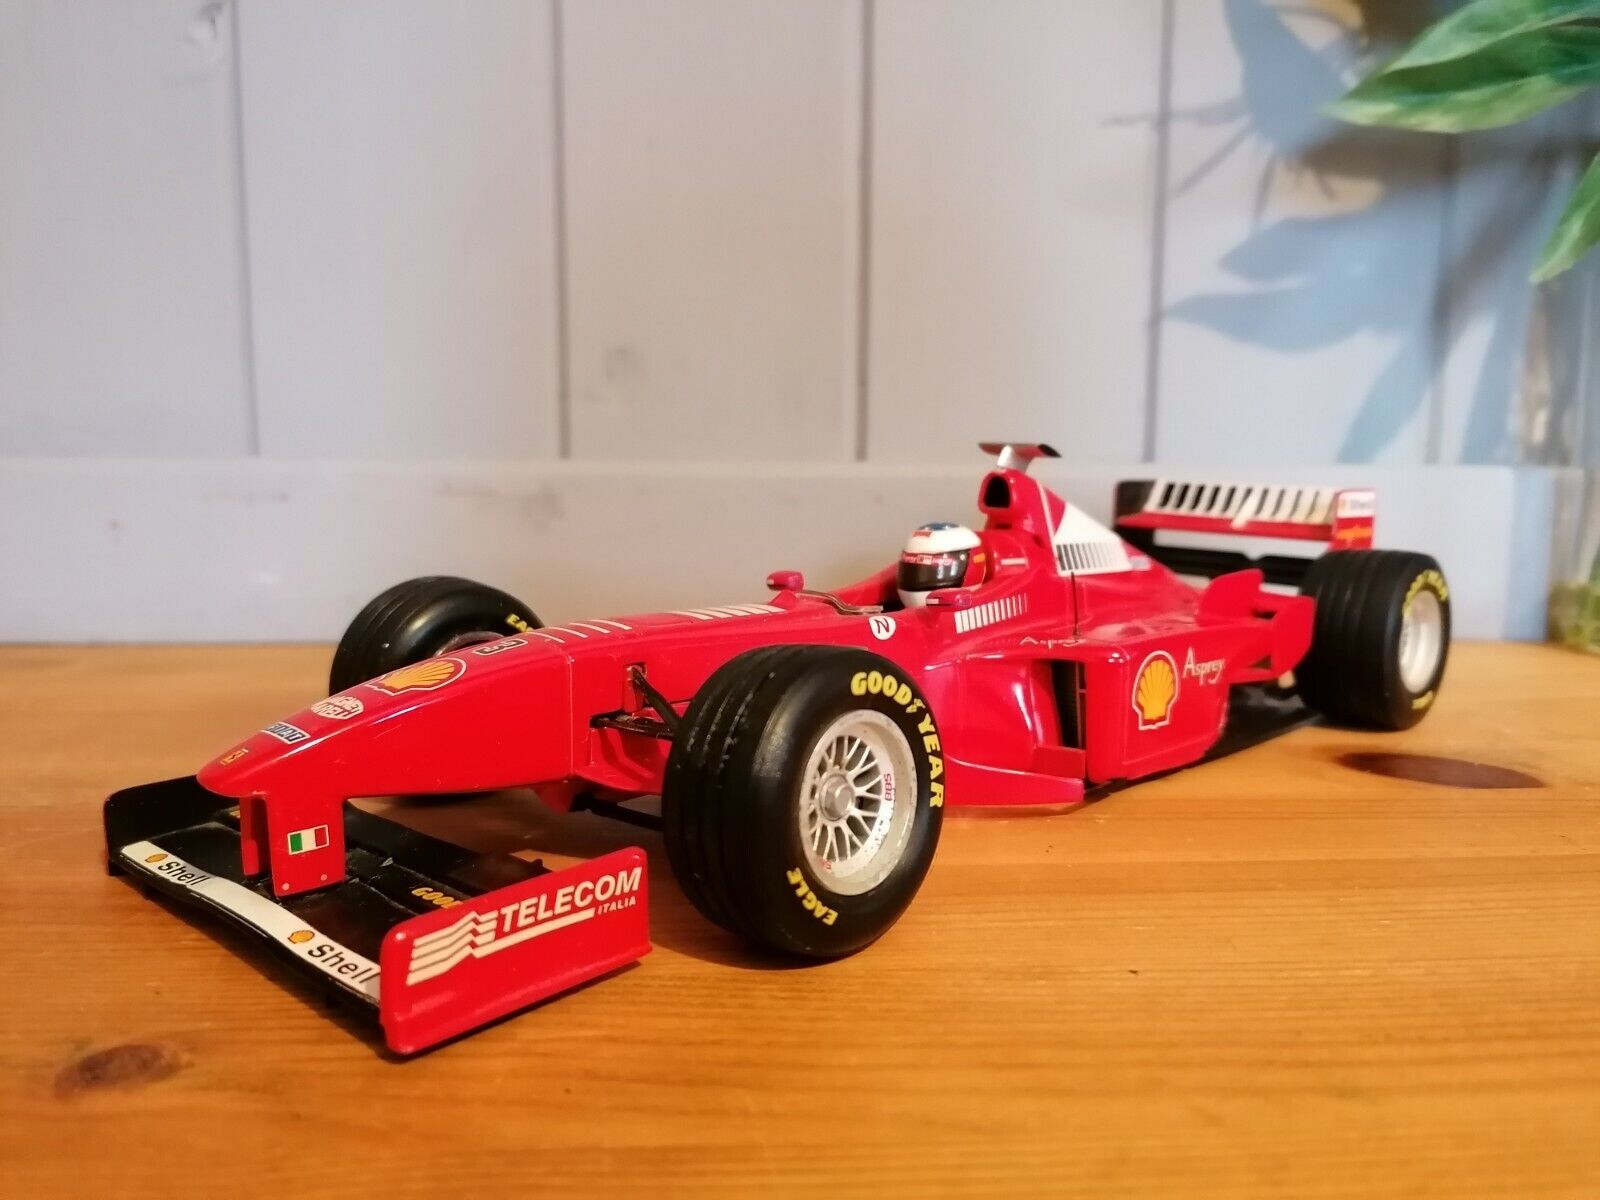 Michael Schumacher Finally resale start Ferrari F300 1998 F1 model scale car 1:18 by Las Vegas Mall